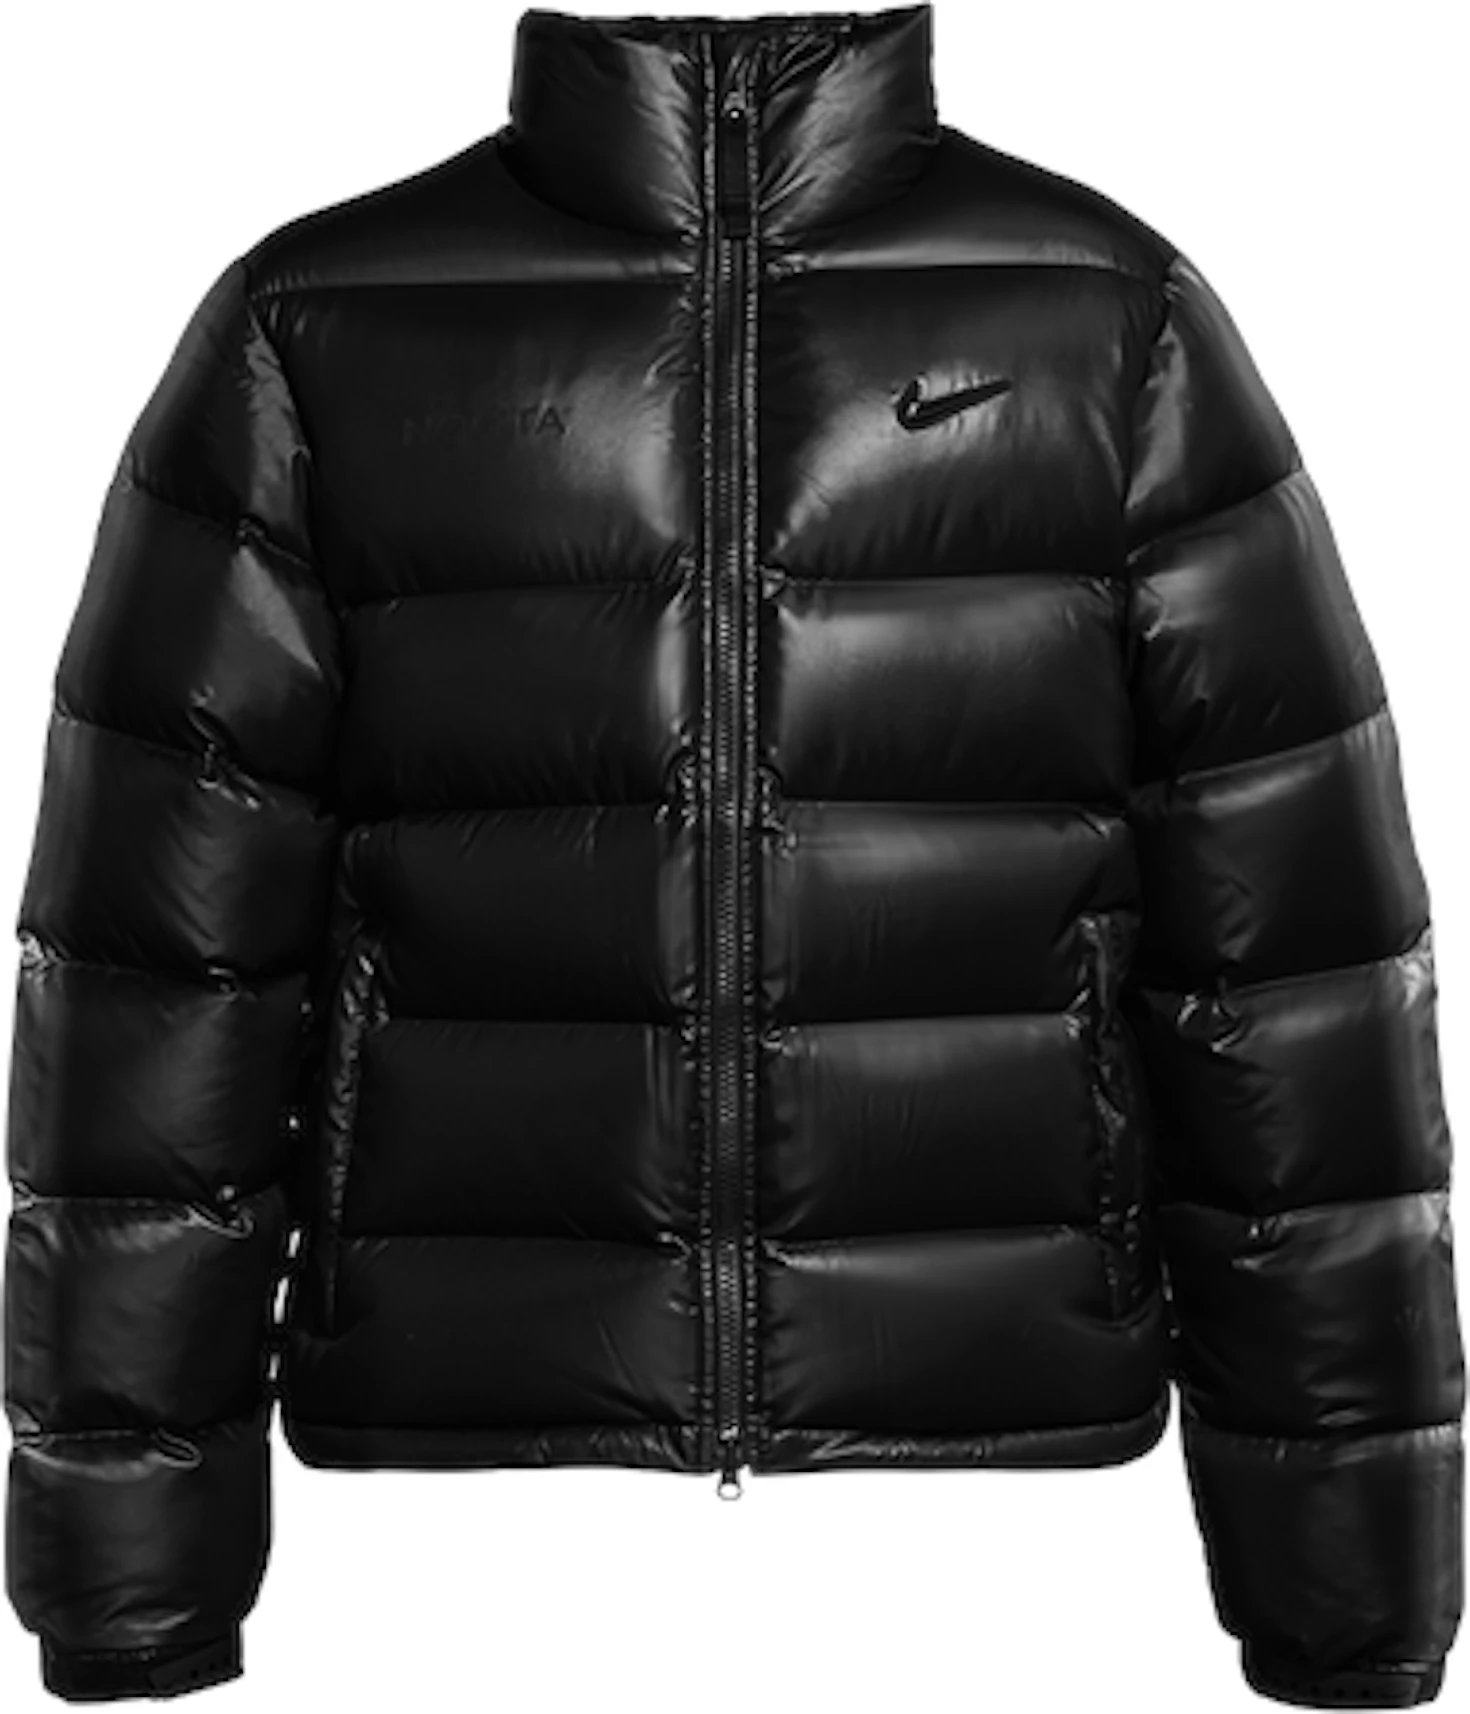 Nike x NOCTA Puffer Jacket | www.phukettopteam.com